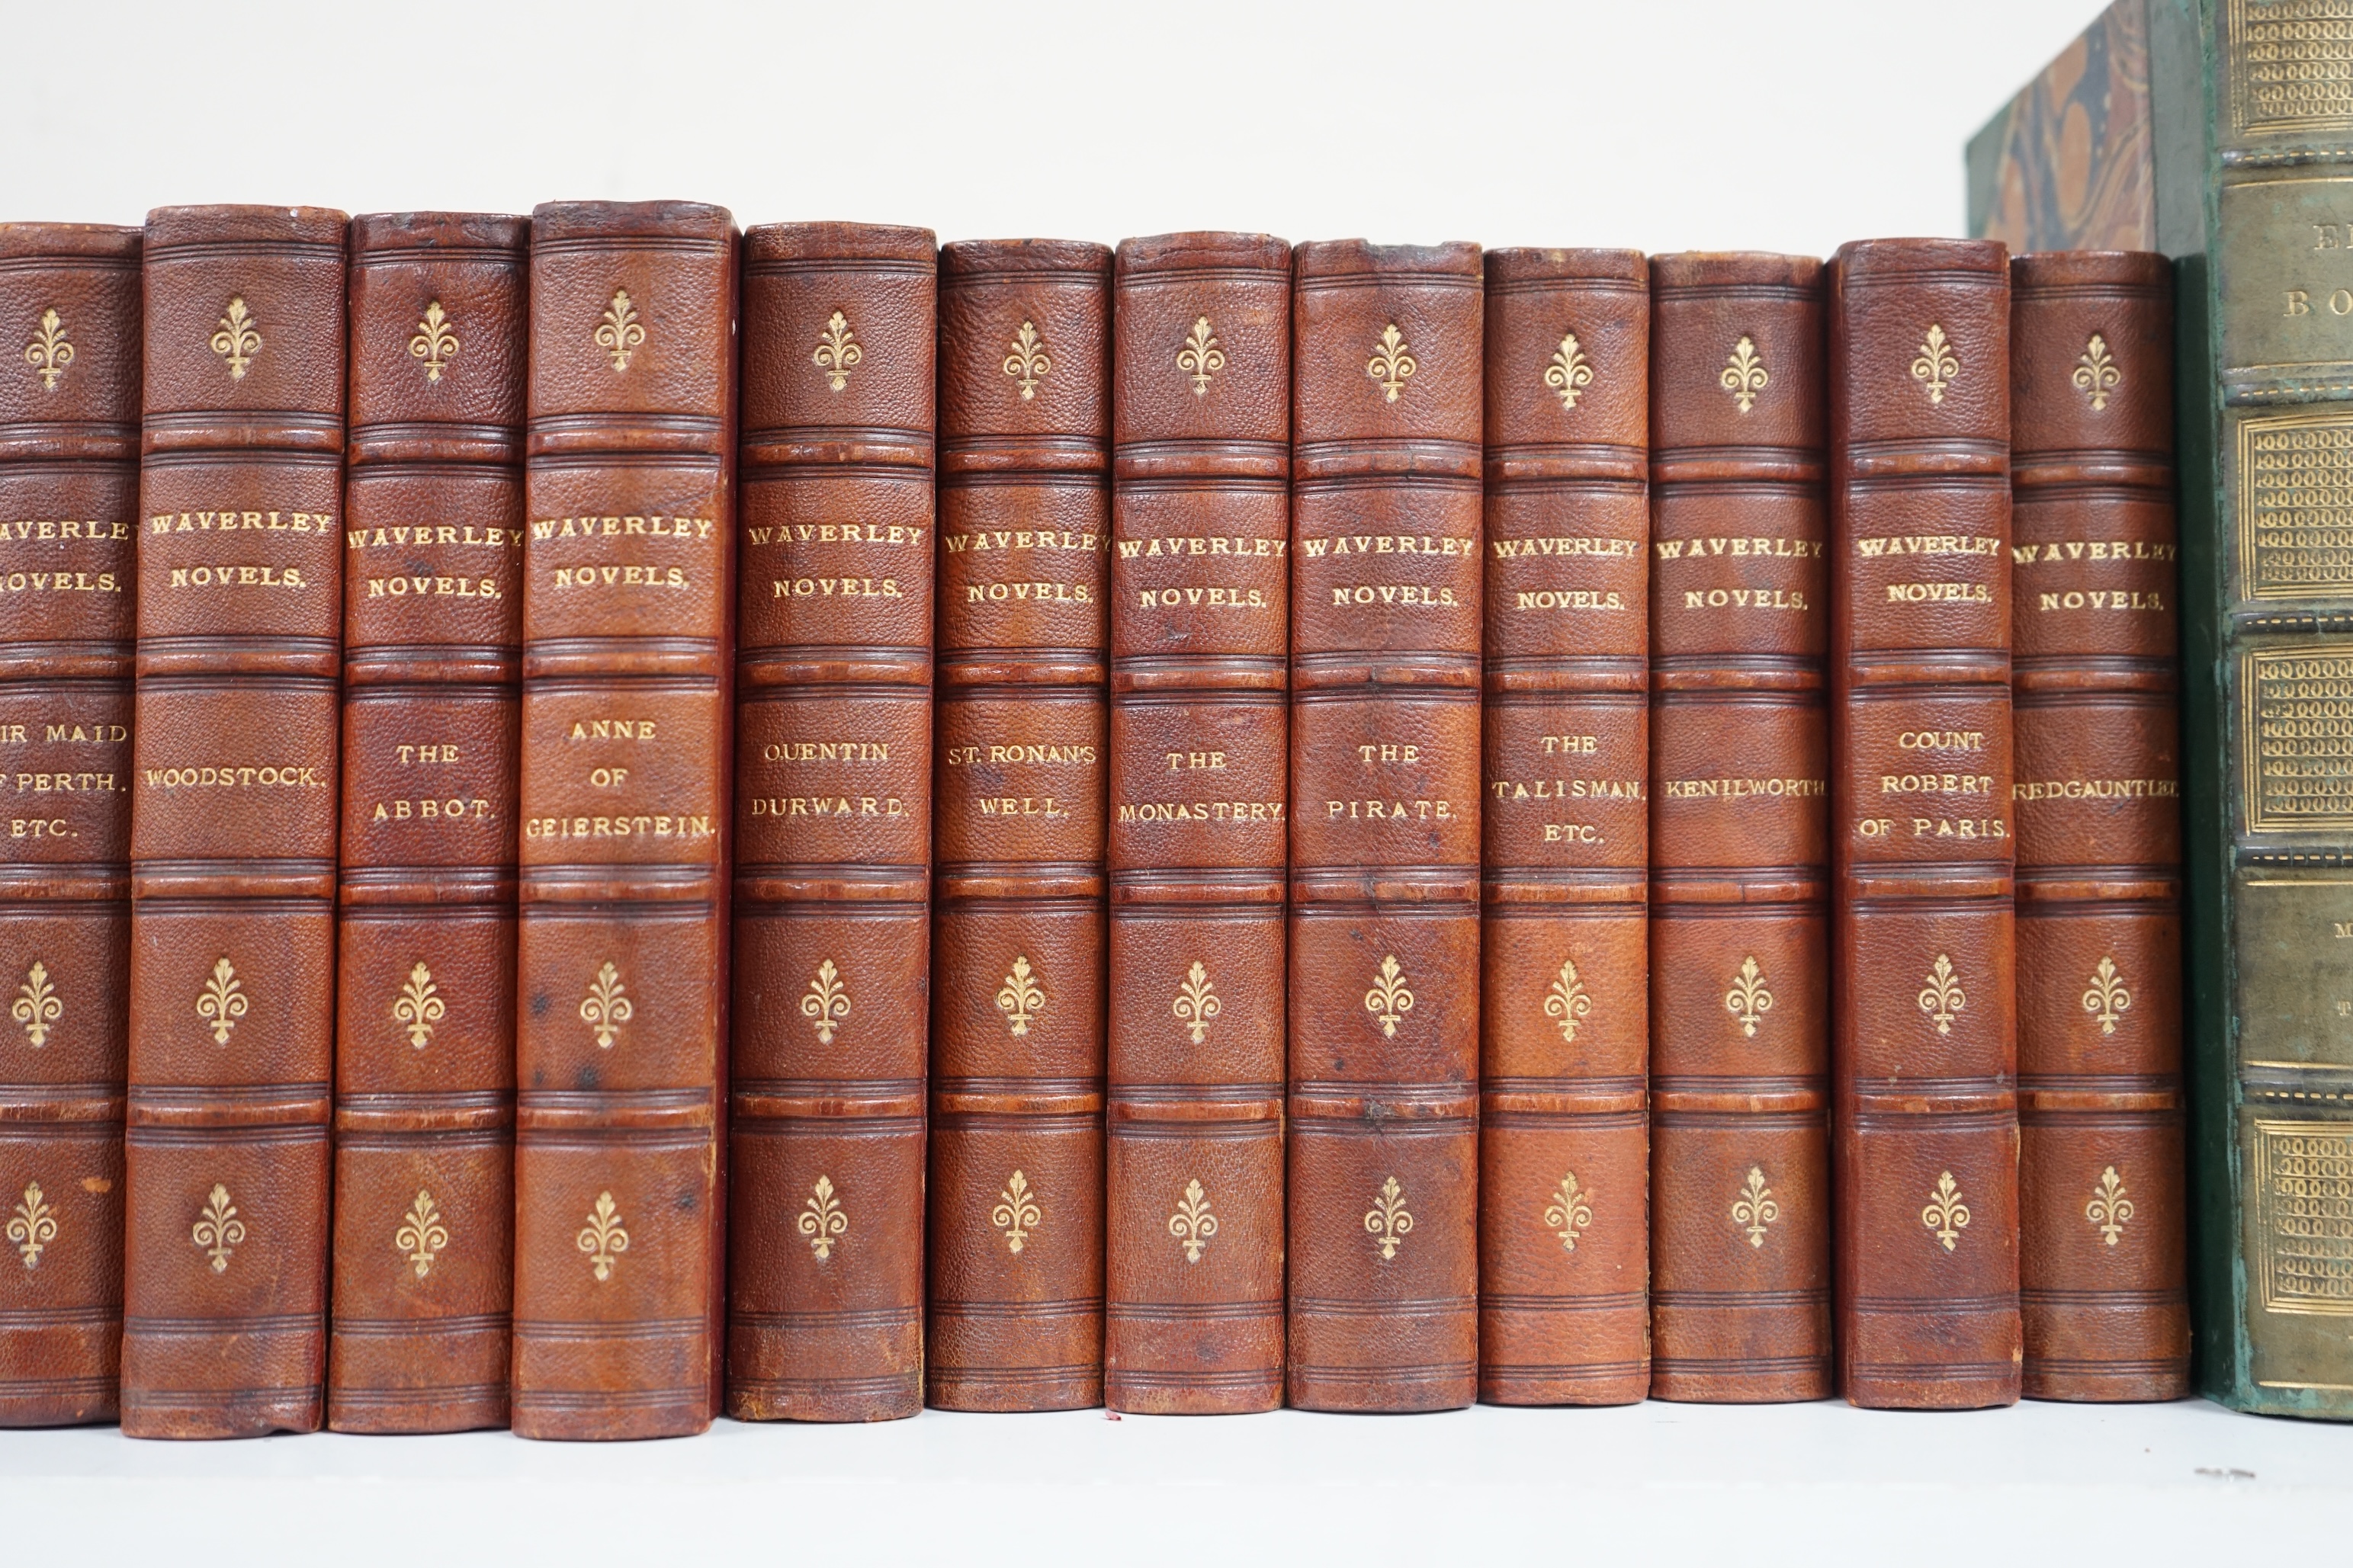 Scott, Sir Walter - Waverley Novels, Centenary Edition, 8vo. half morocco, 25 vols, A & C Black, Edinburgh 1871